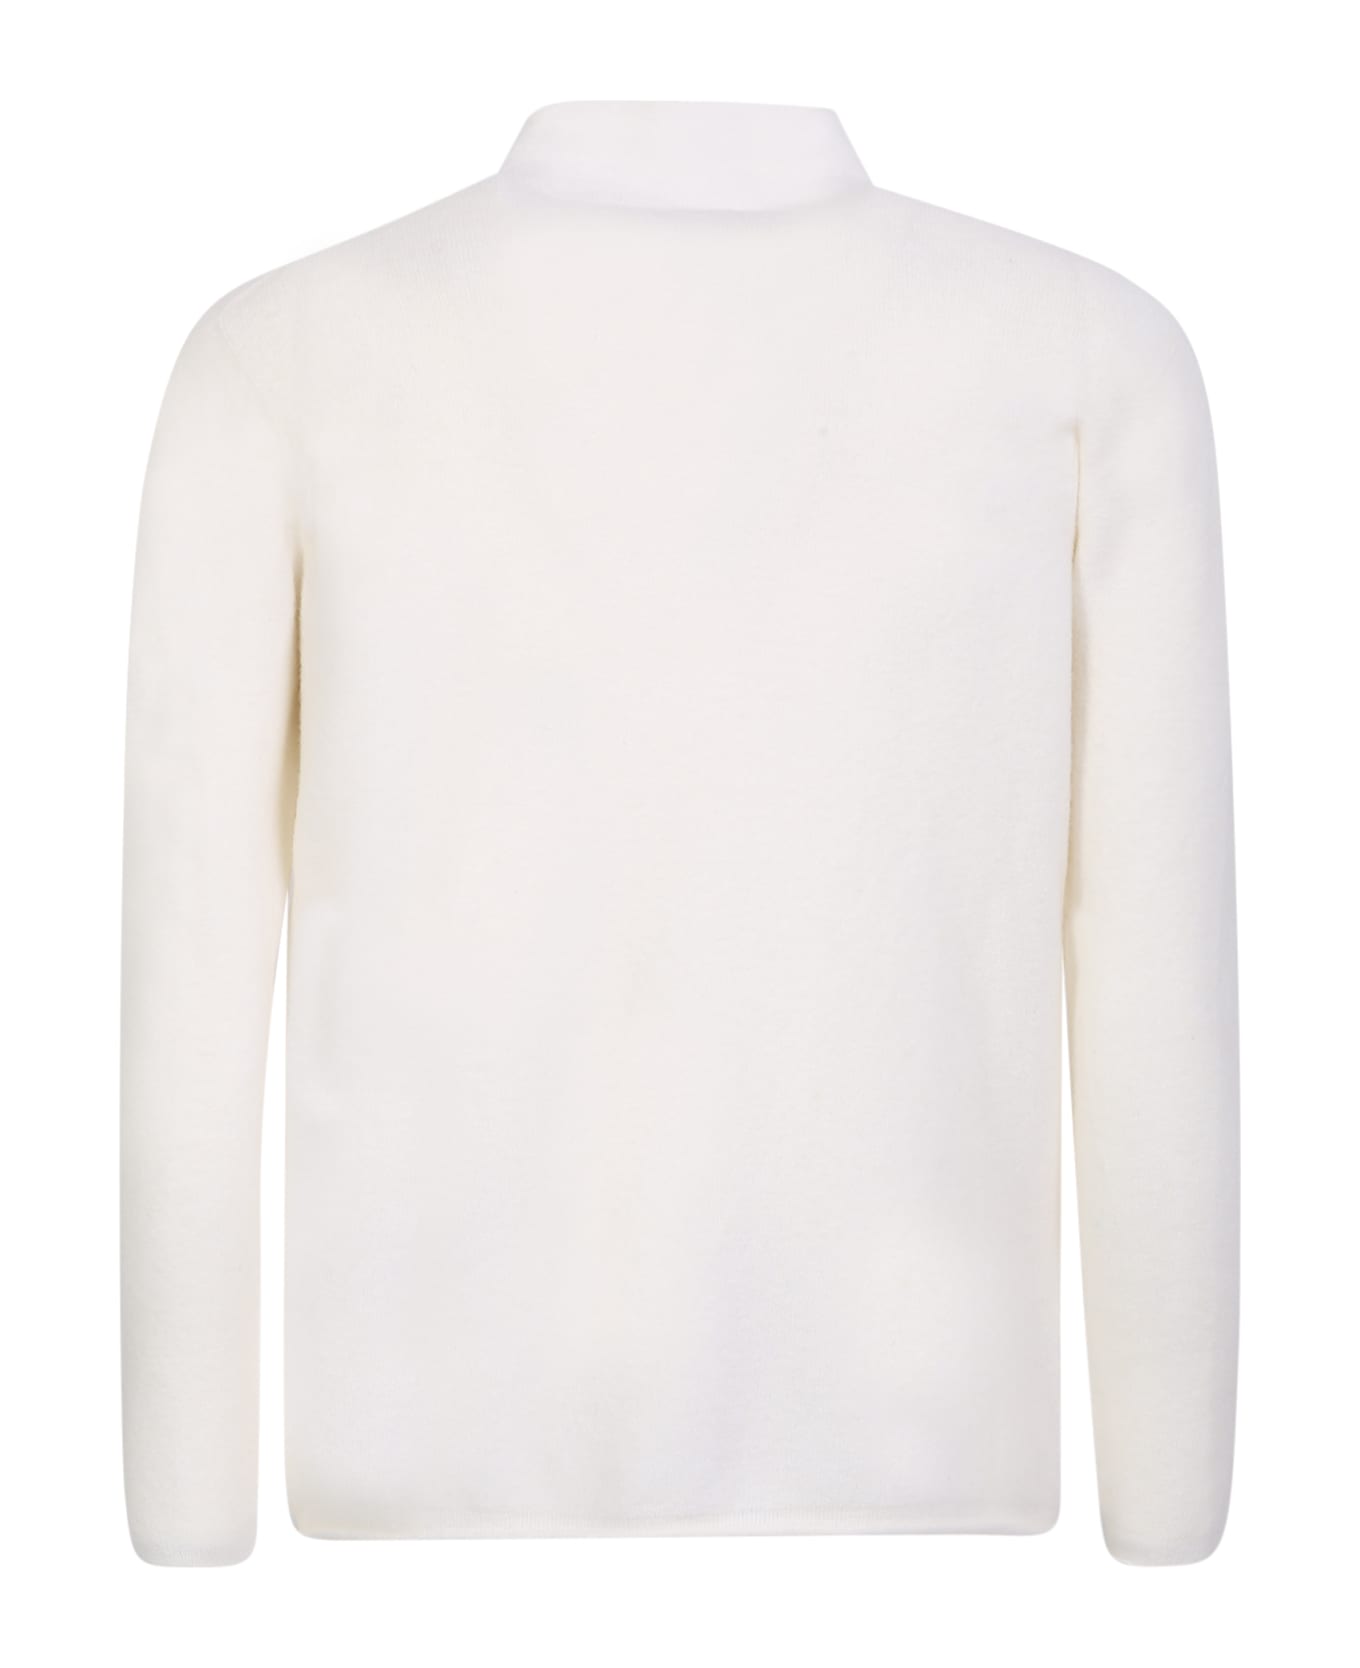 Original Vintage Style Original Vintage High-neck White Sweater - White